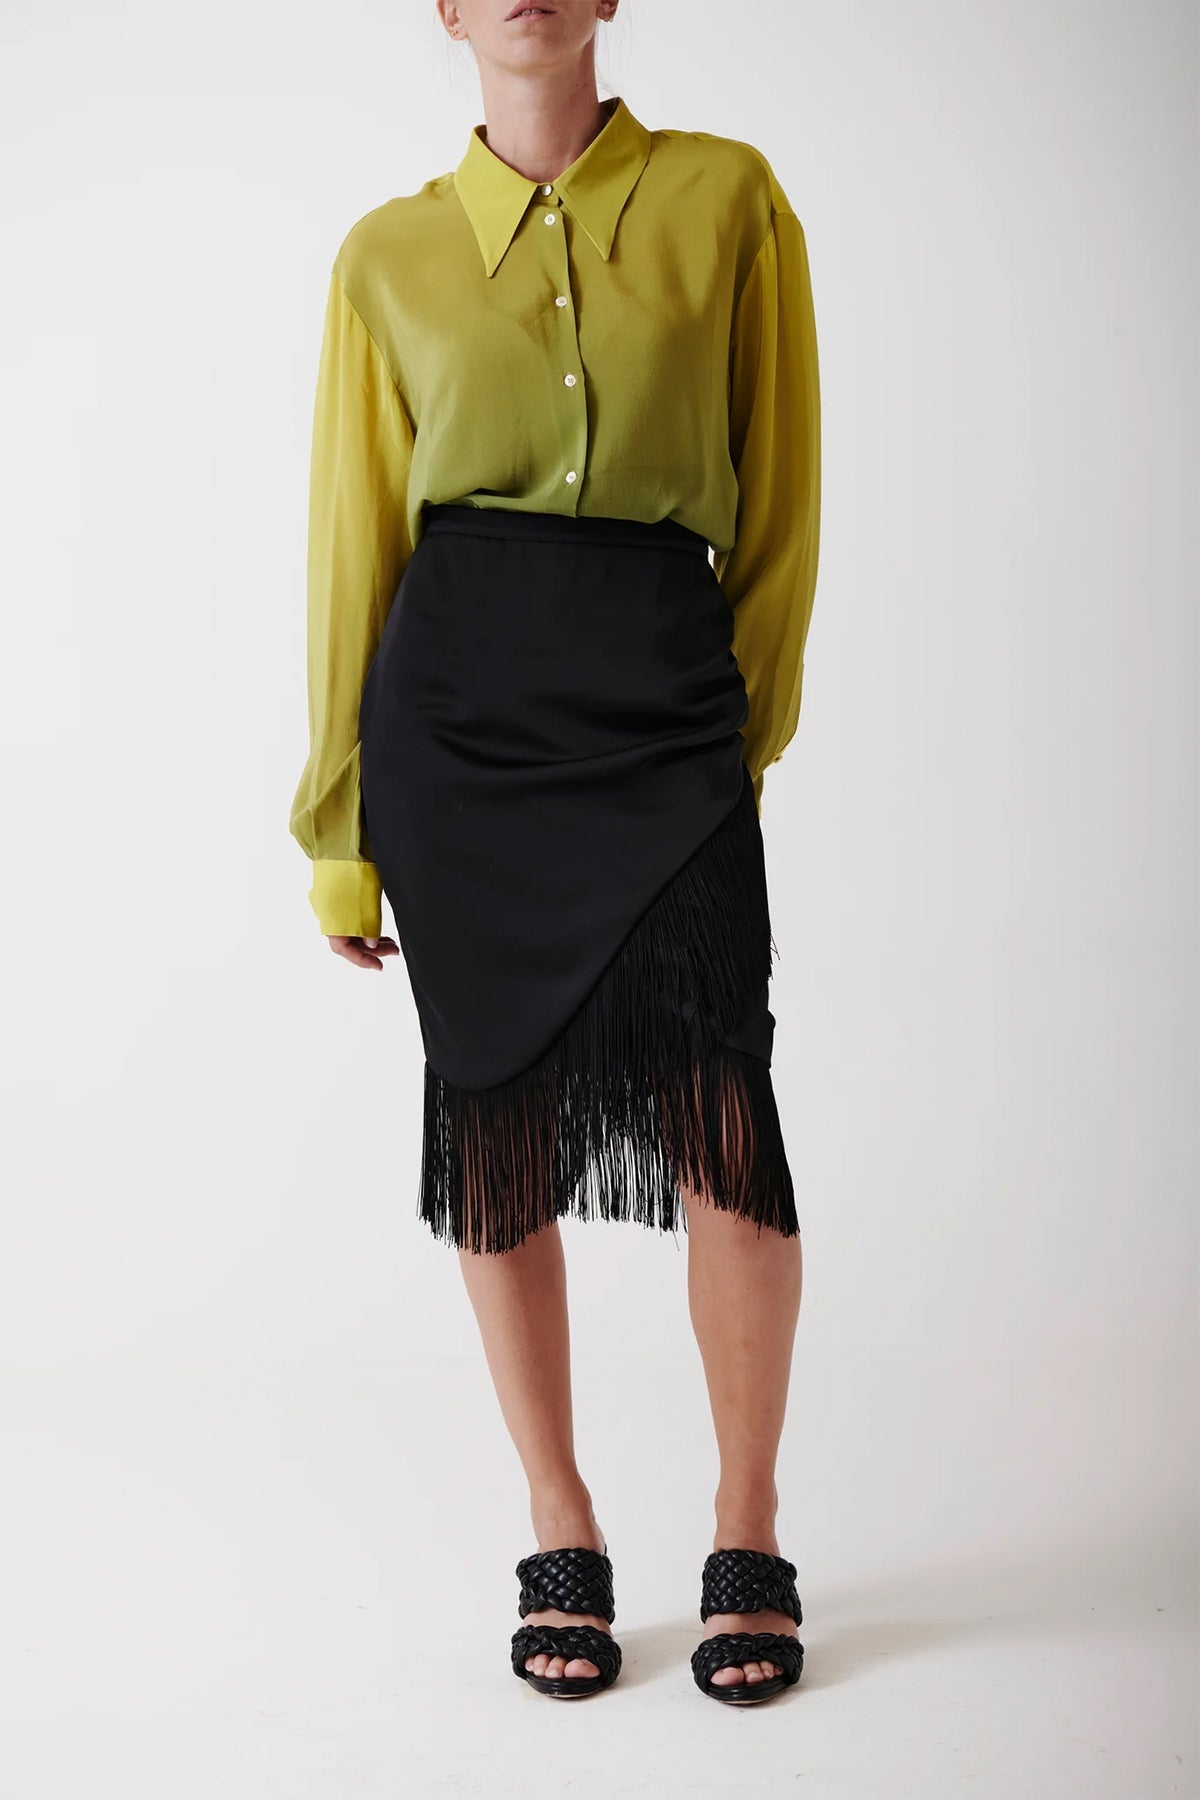 Lola Fringe Mini Skirt in Black - shop-olivia.com